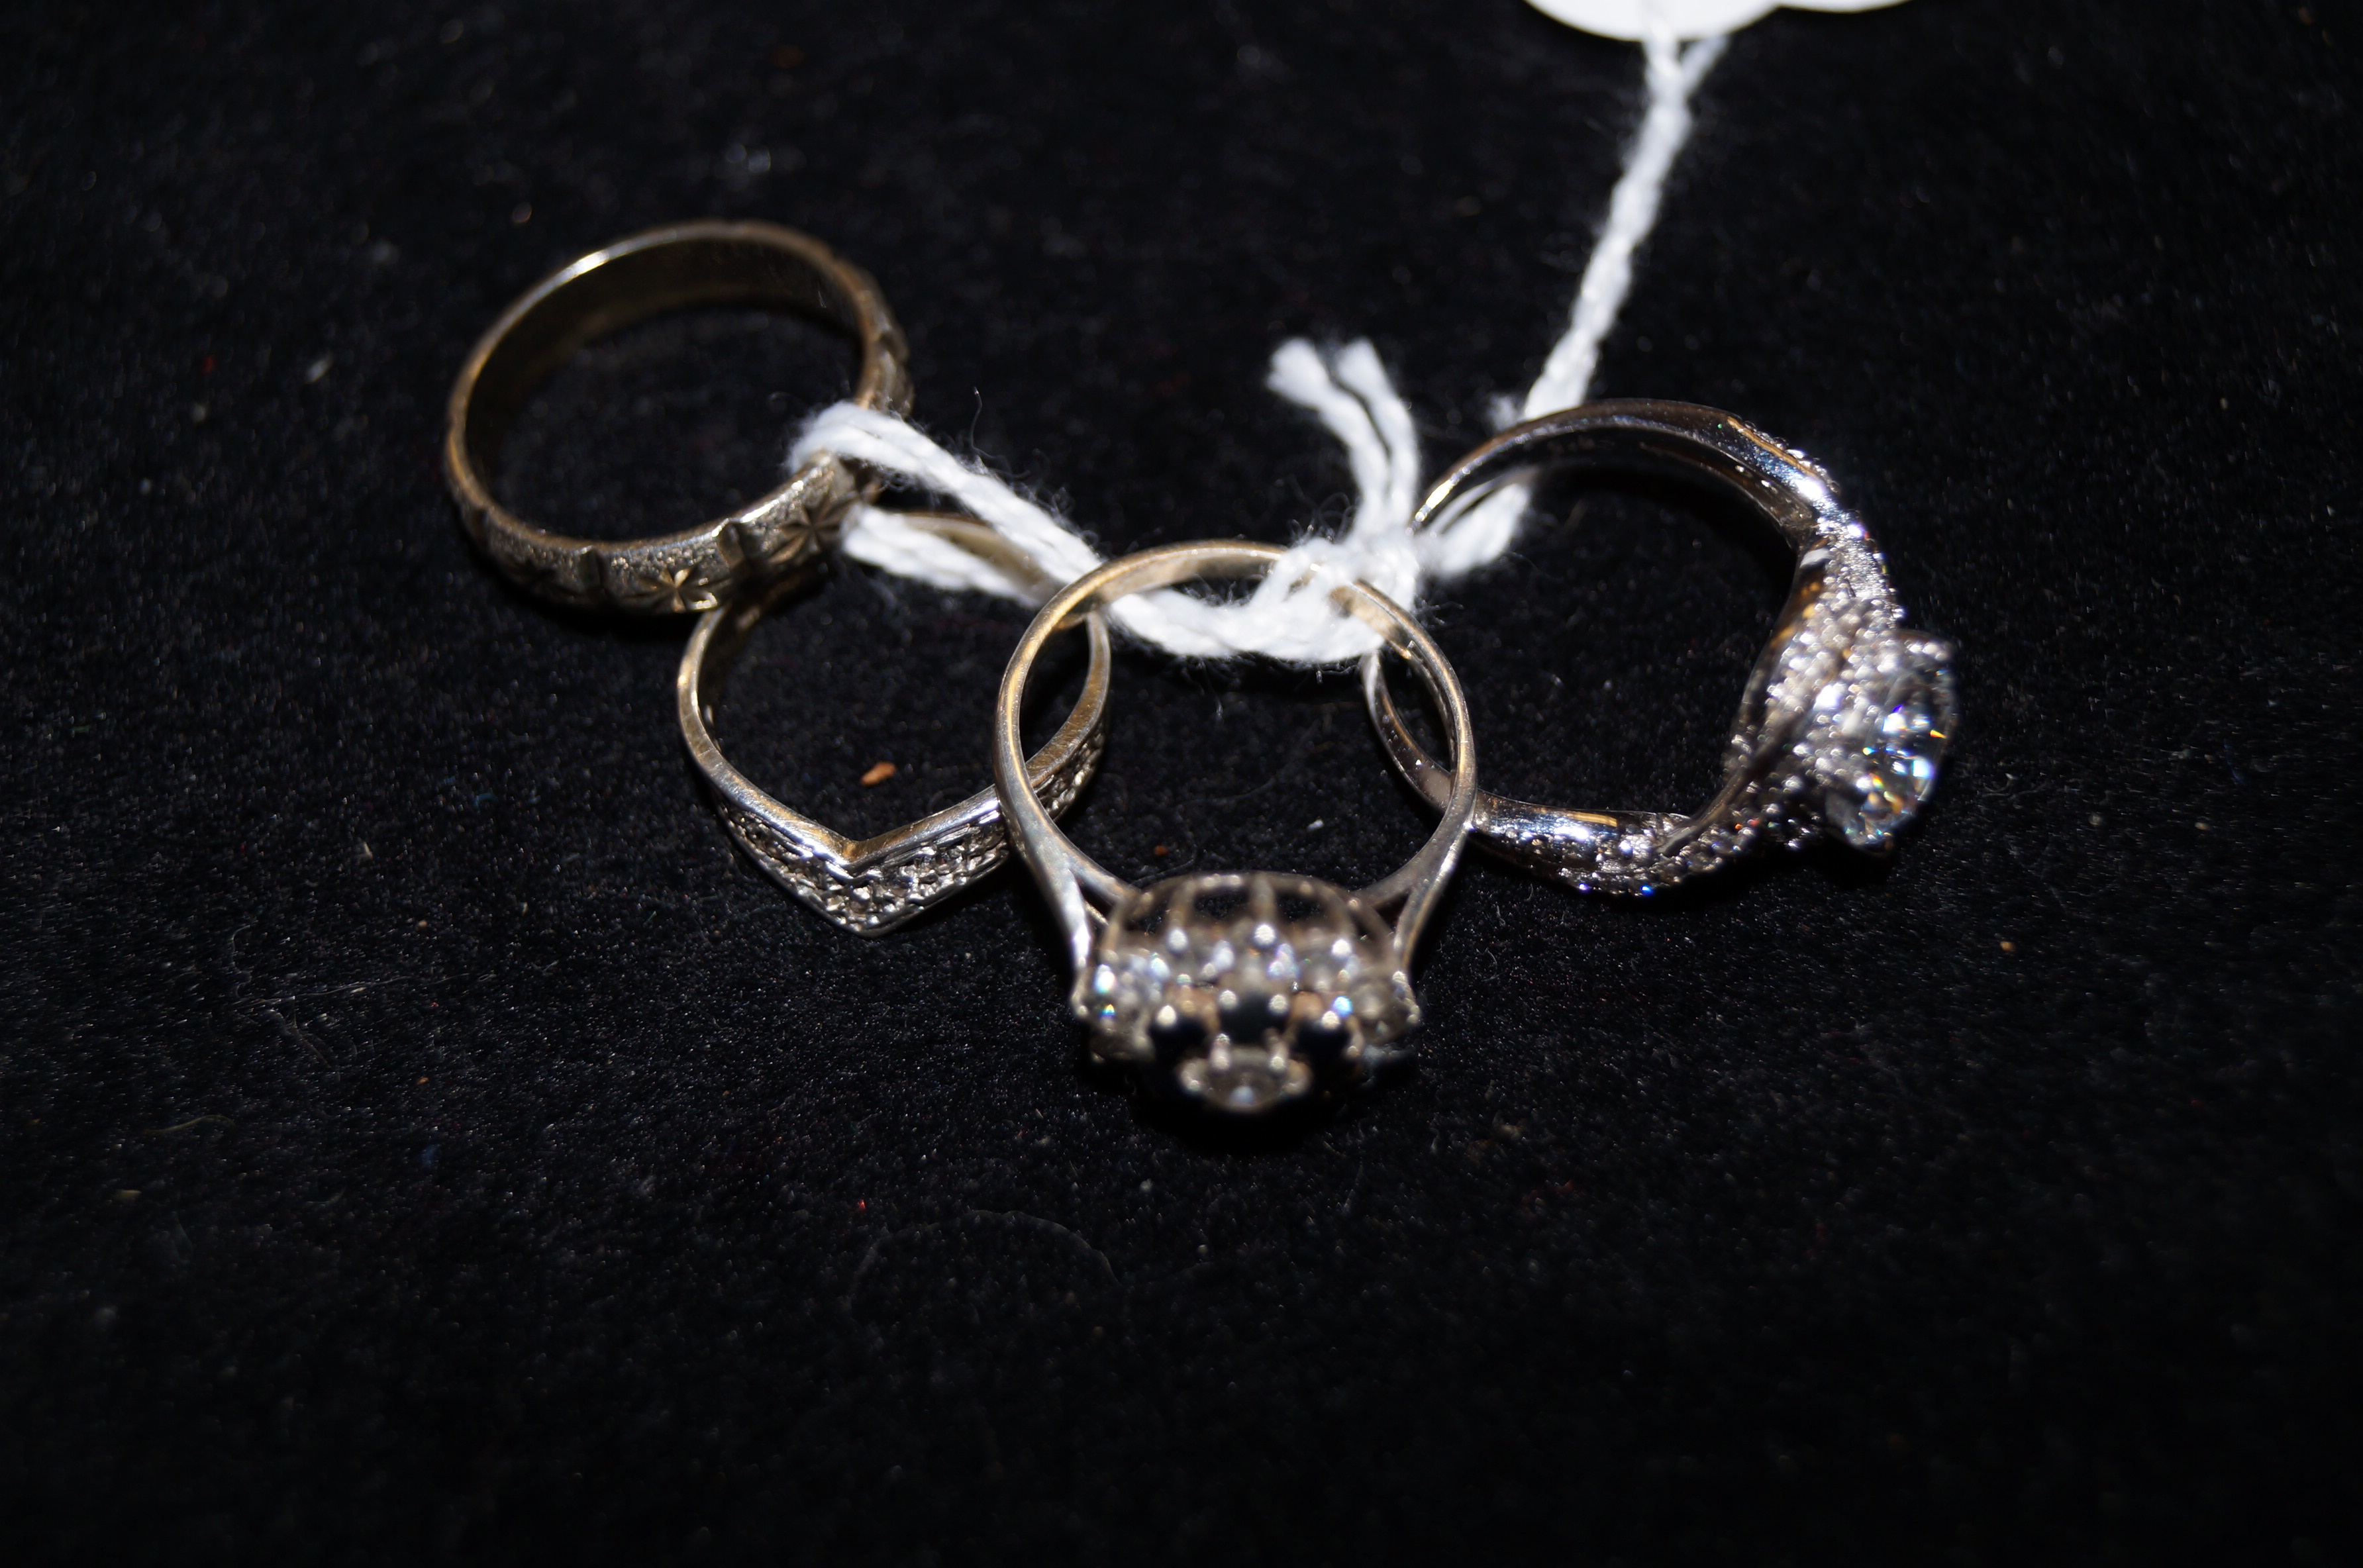 4 Silver dress rings